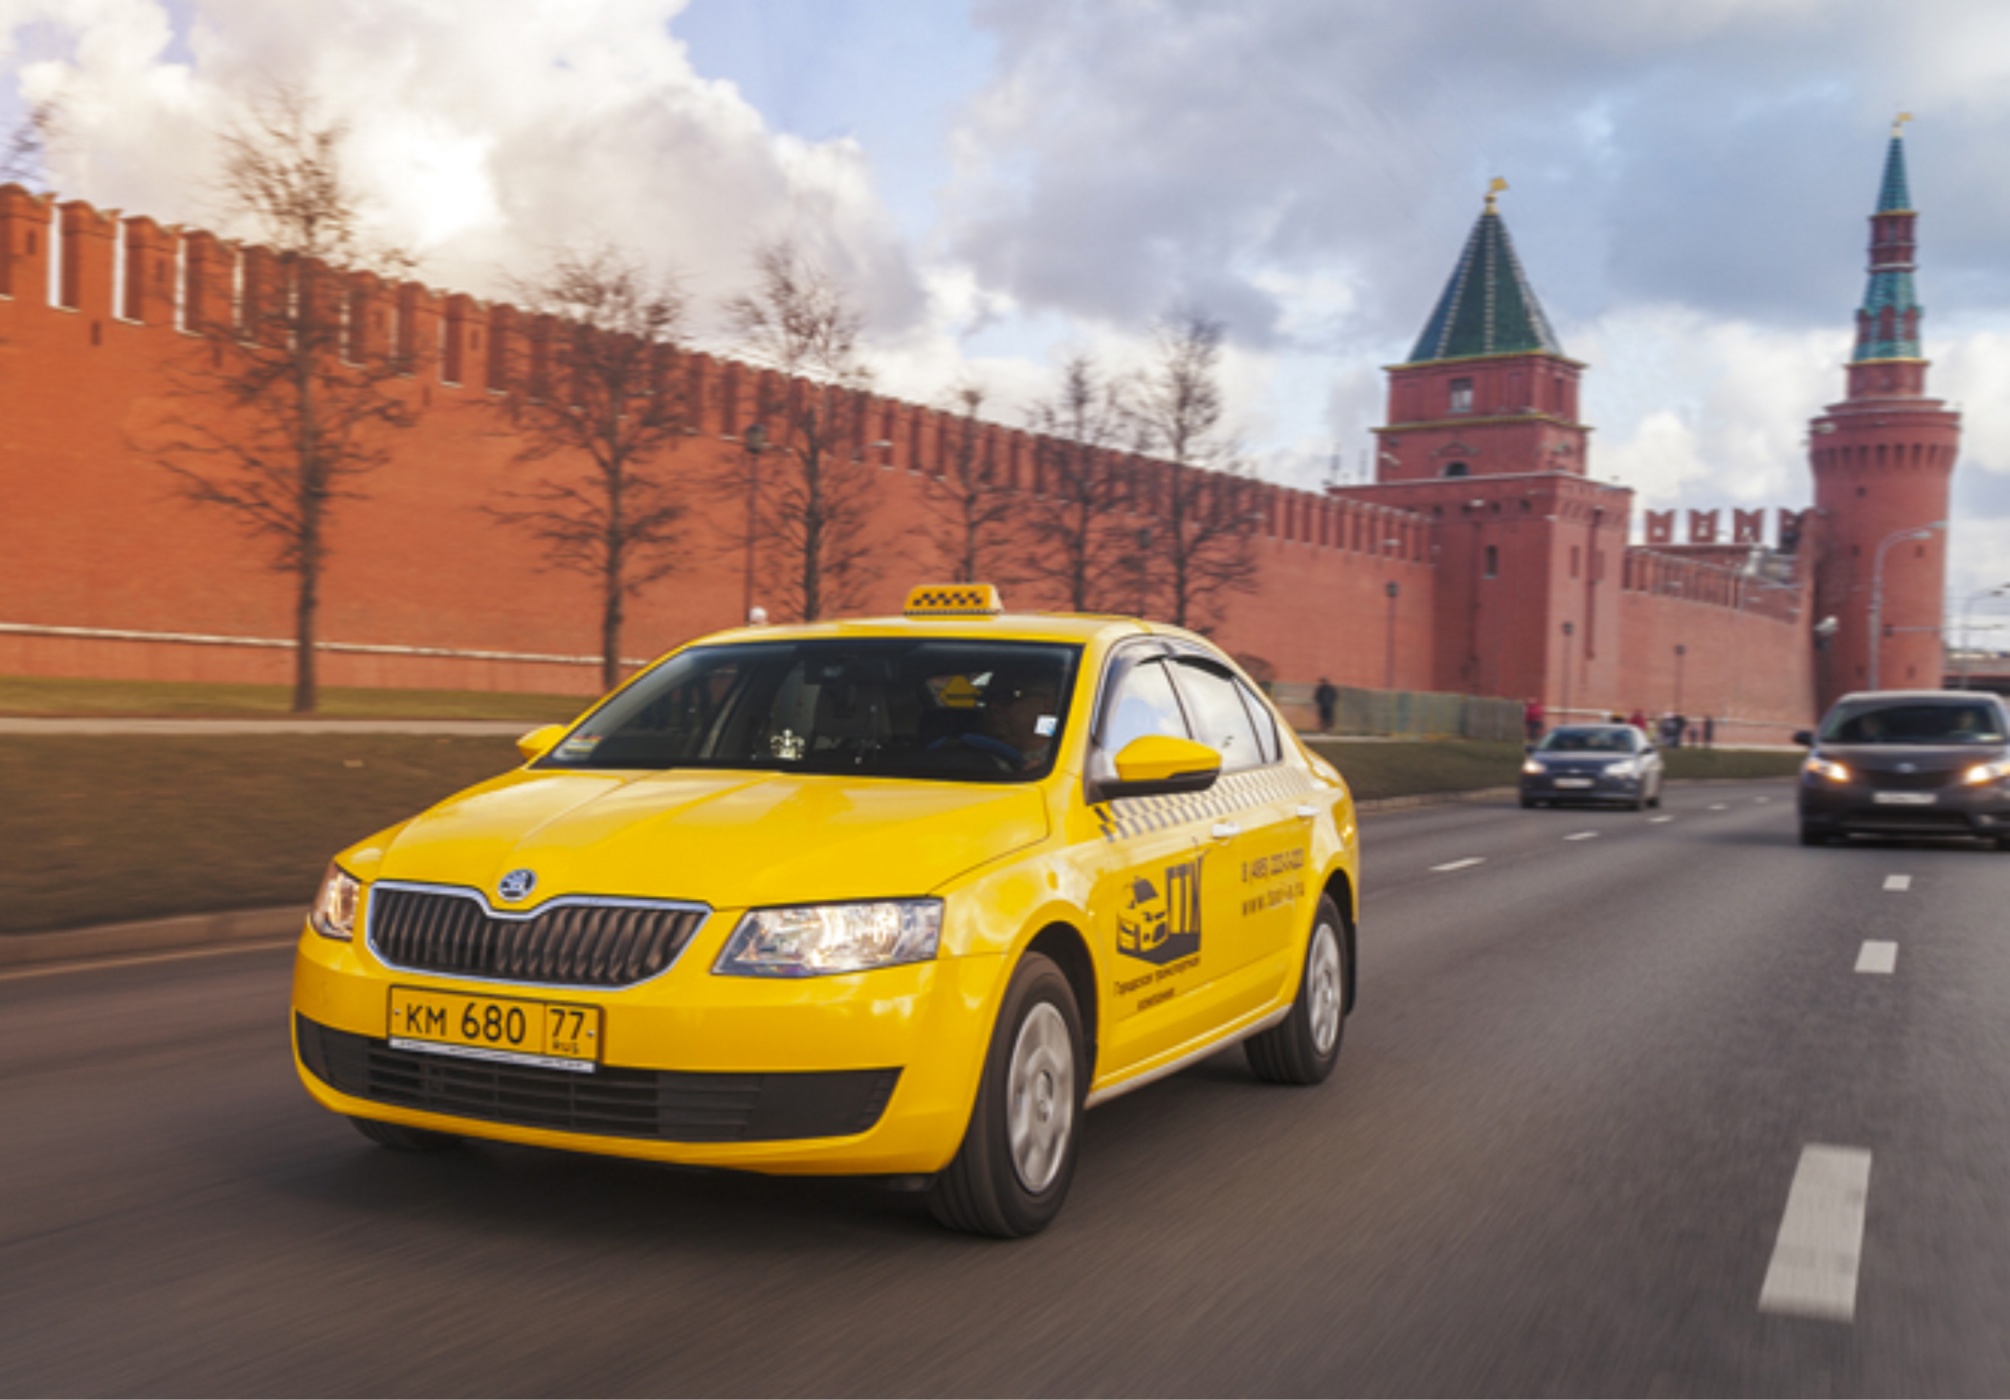 Иви такси. Машина "такси". Автомобиль «такси». Такси Москва. Московское такси.